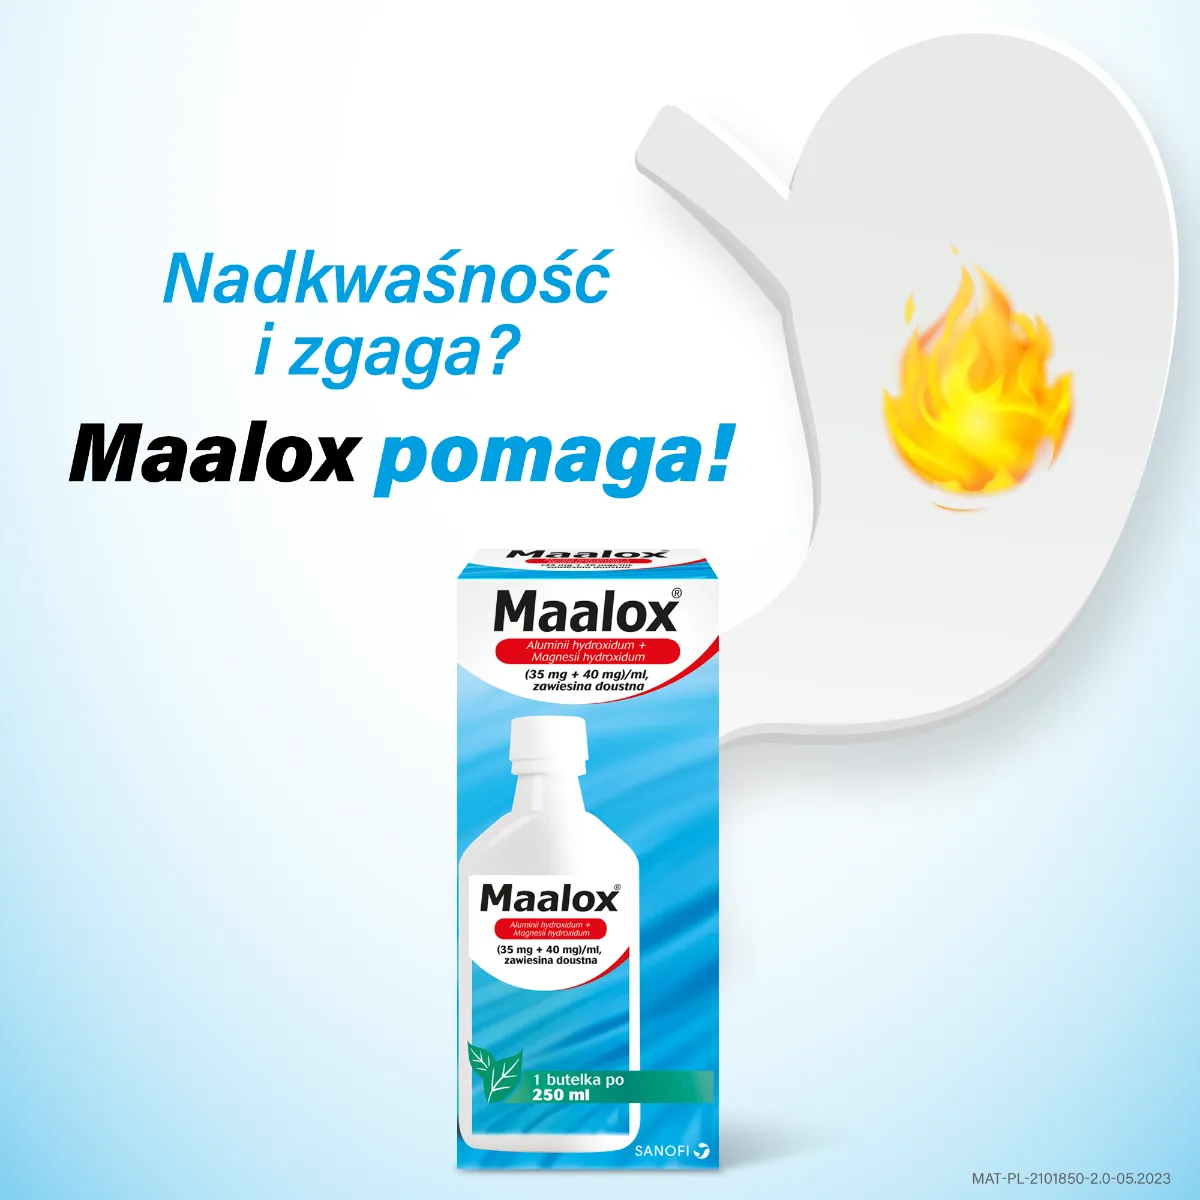 Maalox ( Alumini hydroxidum 35 mg + Magnesii hydroxidum 40 mg ) /ml, zawiesina doustna, 250 ml 